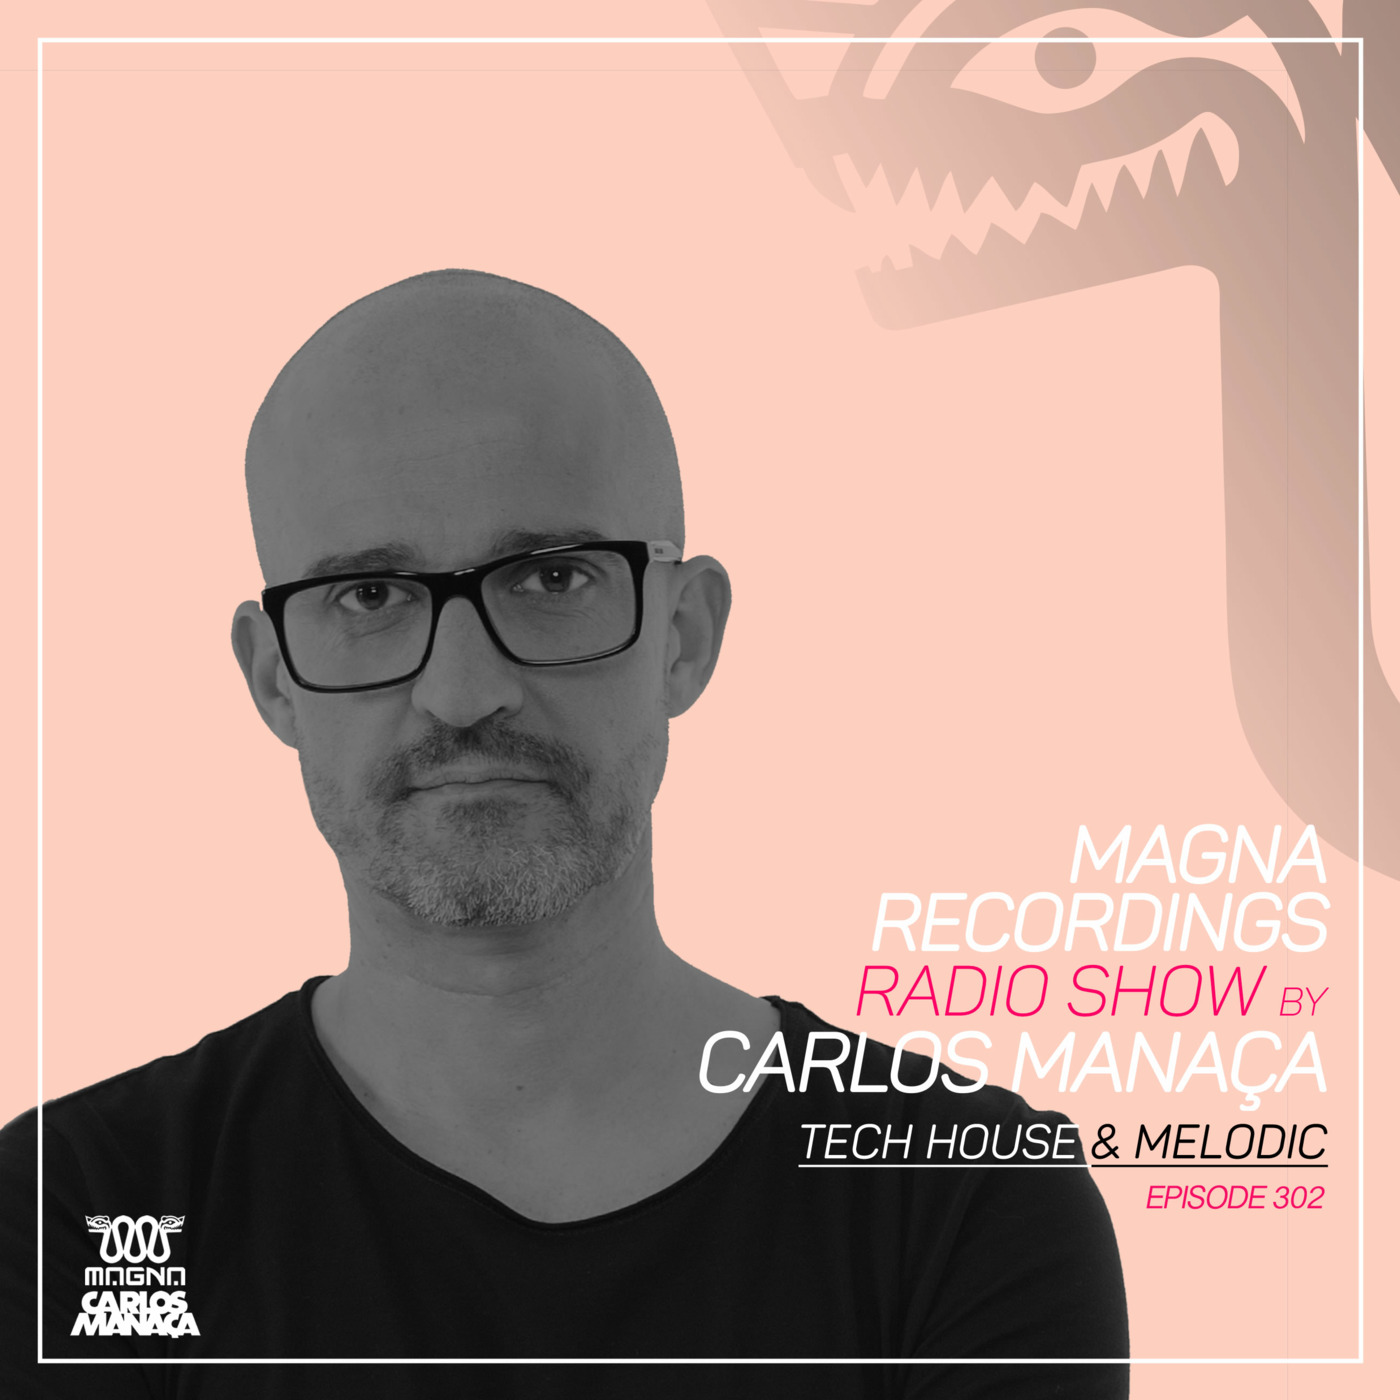 Episode 127: Magna Recordings Radio Show by Carlos Manaça 302 | Tech House & Melodic